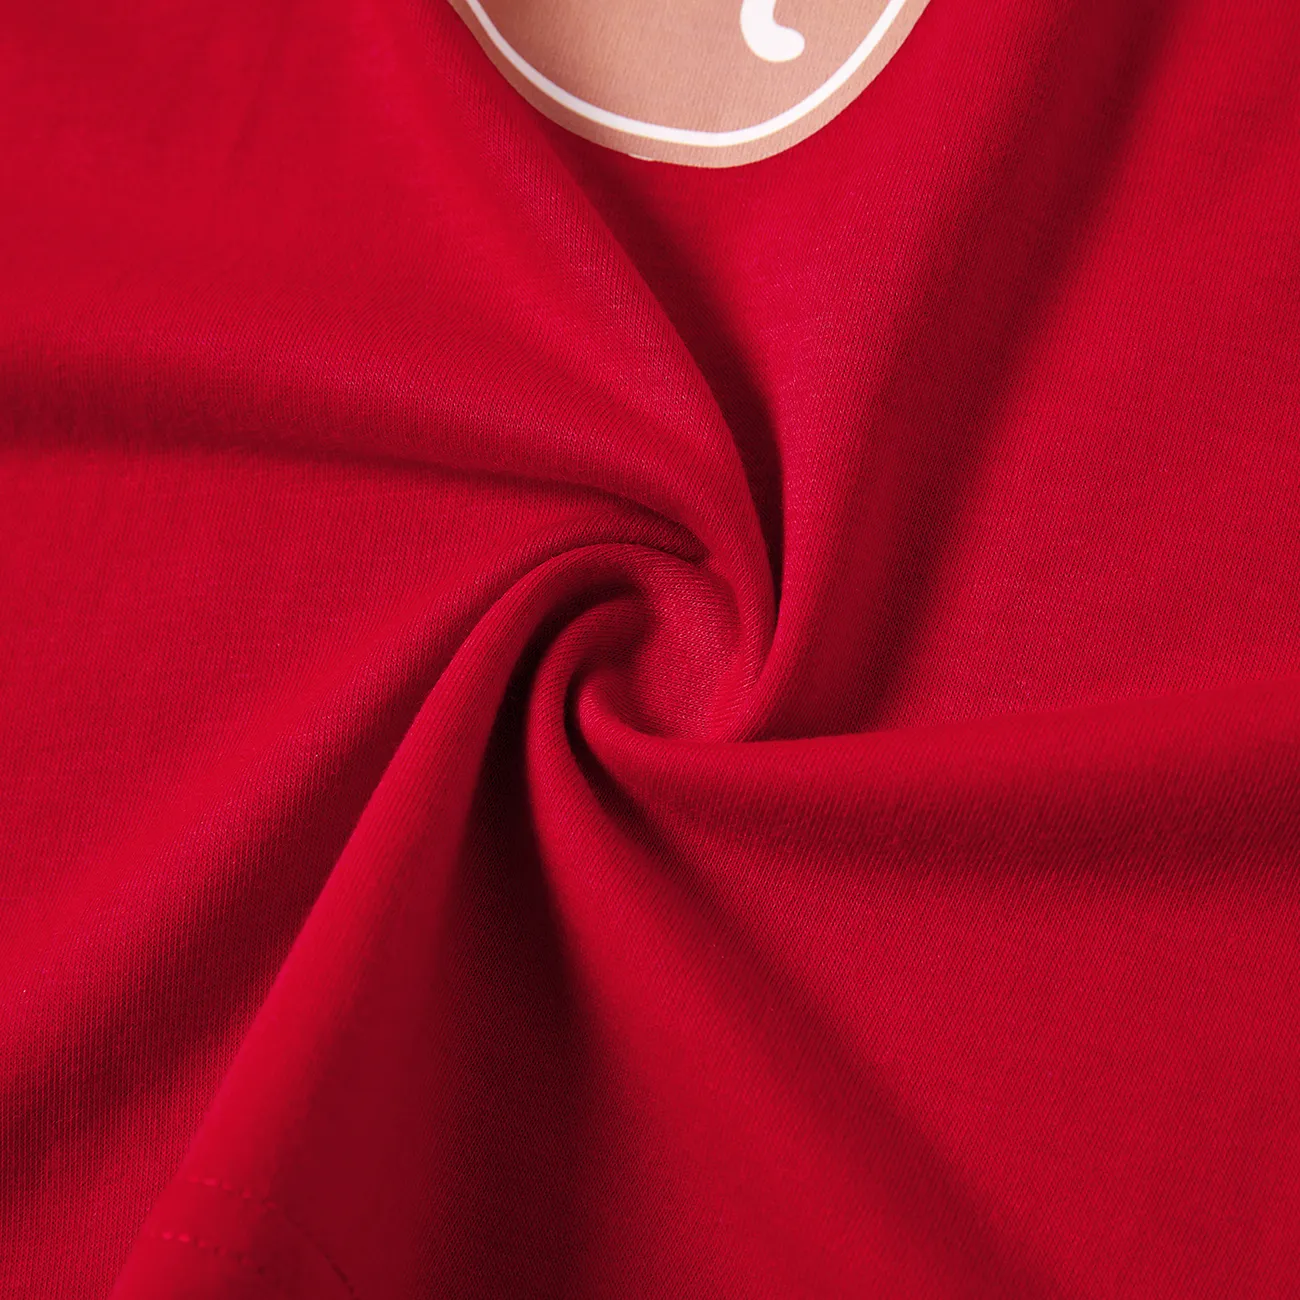 聖誕節 全家裝 短袖 親子裝 睡衣 (Flame Resistant) 紅色 big image 1